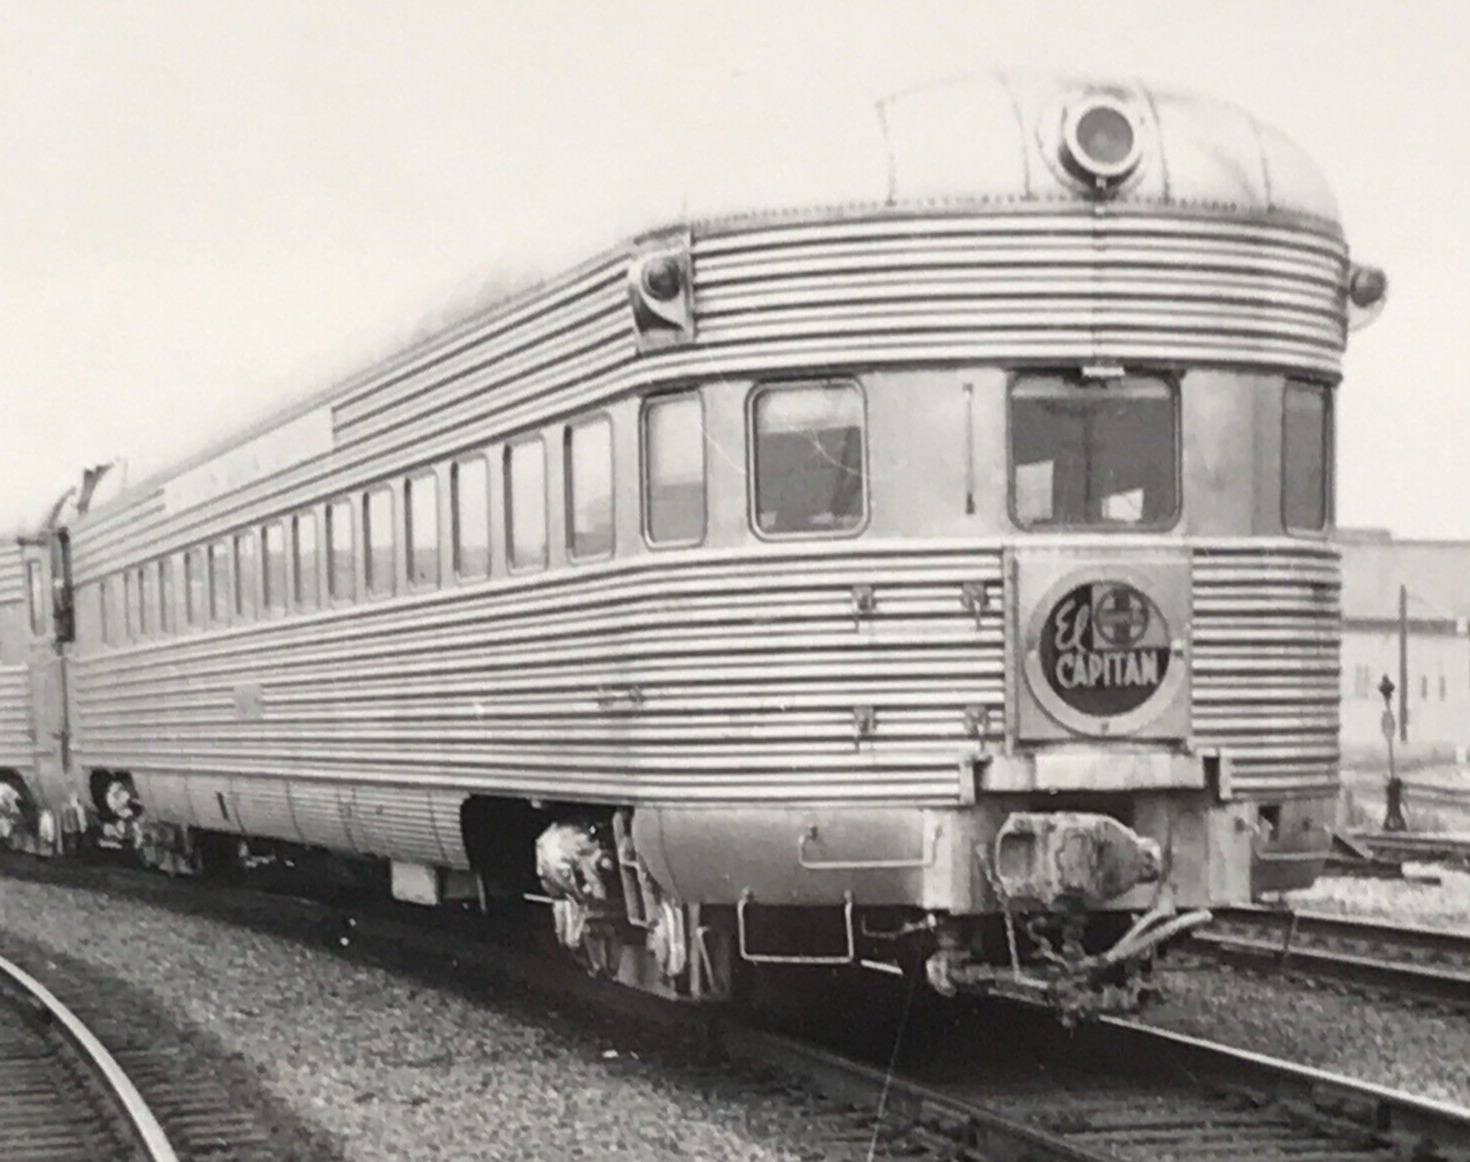 1950s Atchison Topeka & Santa Fe Railway AT&SF El Capitan Passenger Car Photo